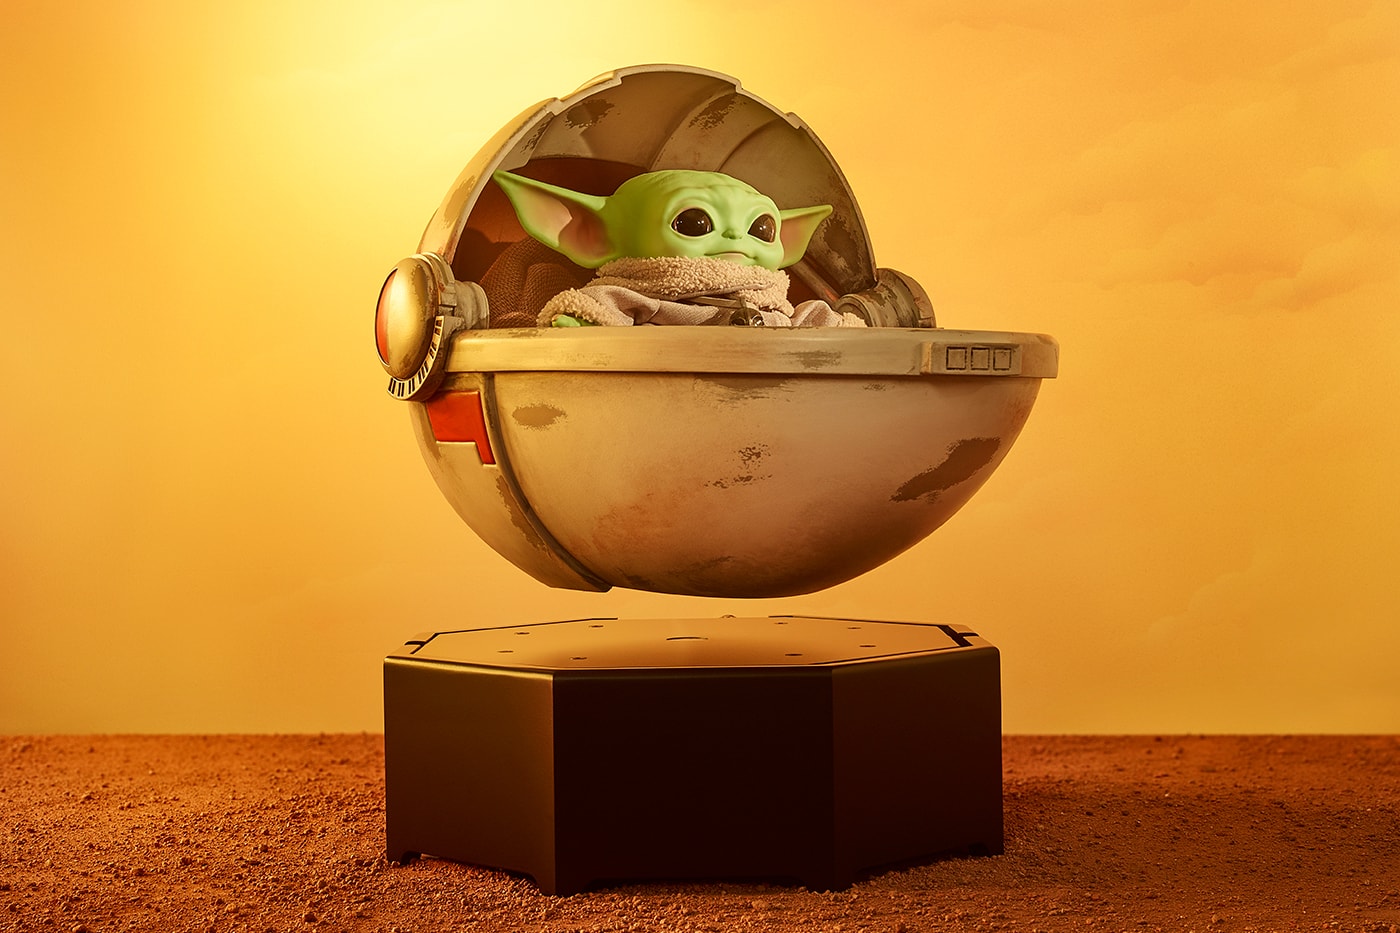 Mattel Baby Yoda Plush and Hover Pram Auction creations projectart limited edtion sale ebay charity grogu child mandalorian star wars disney price